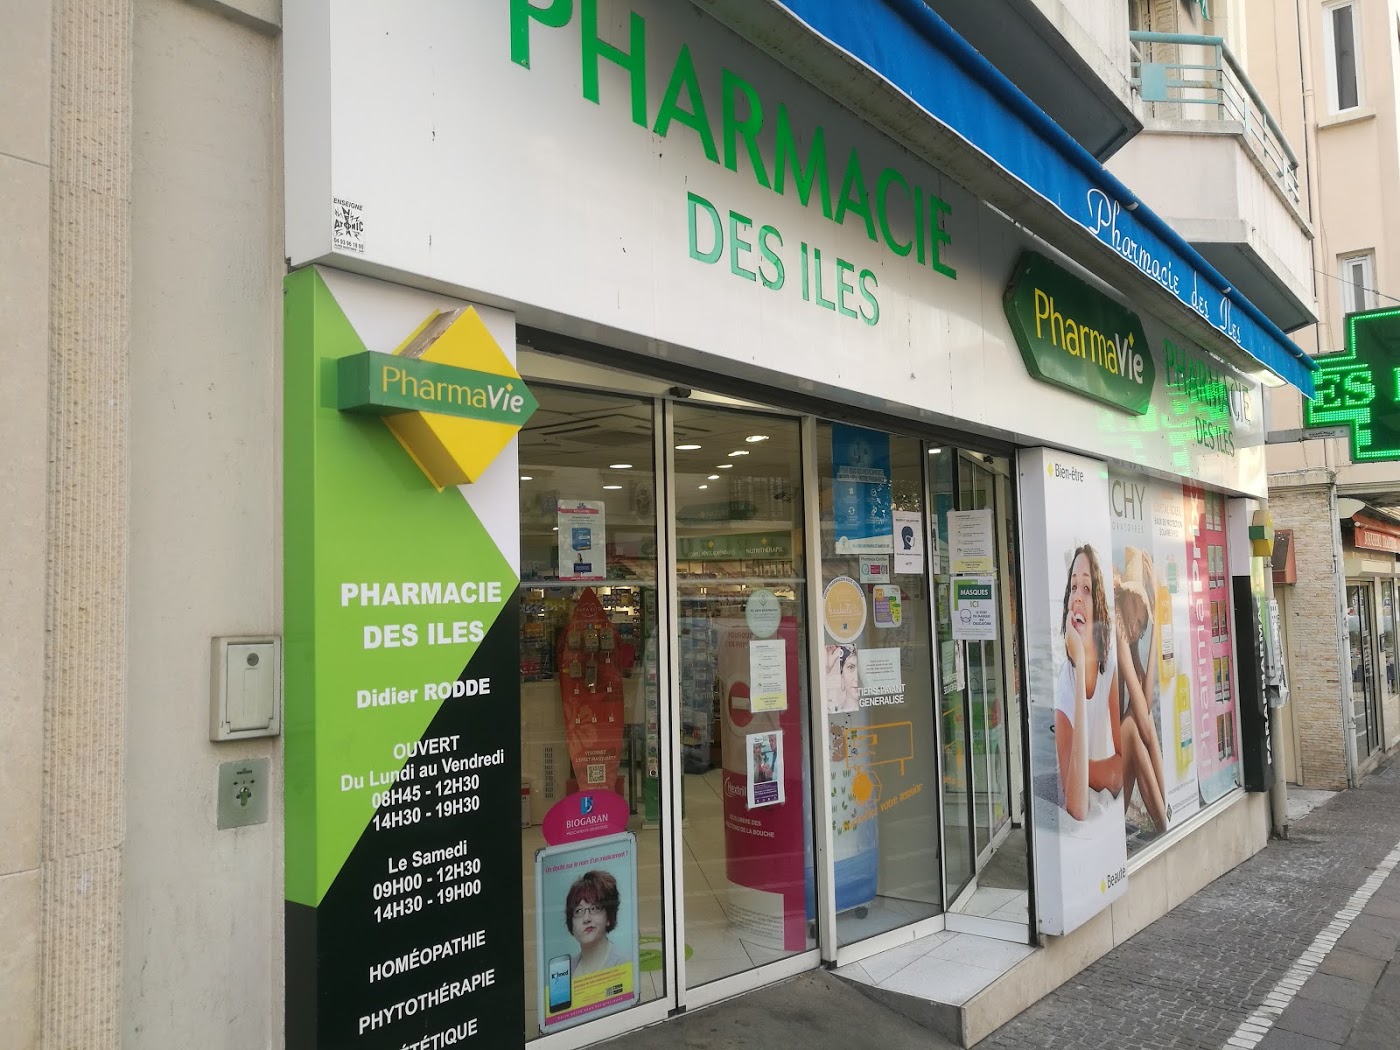 Pharmacie des Iles